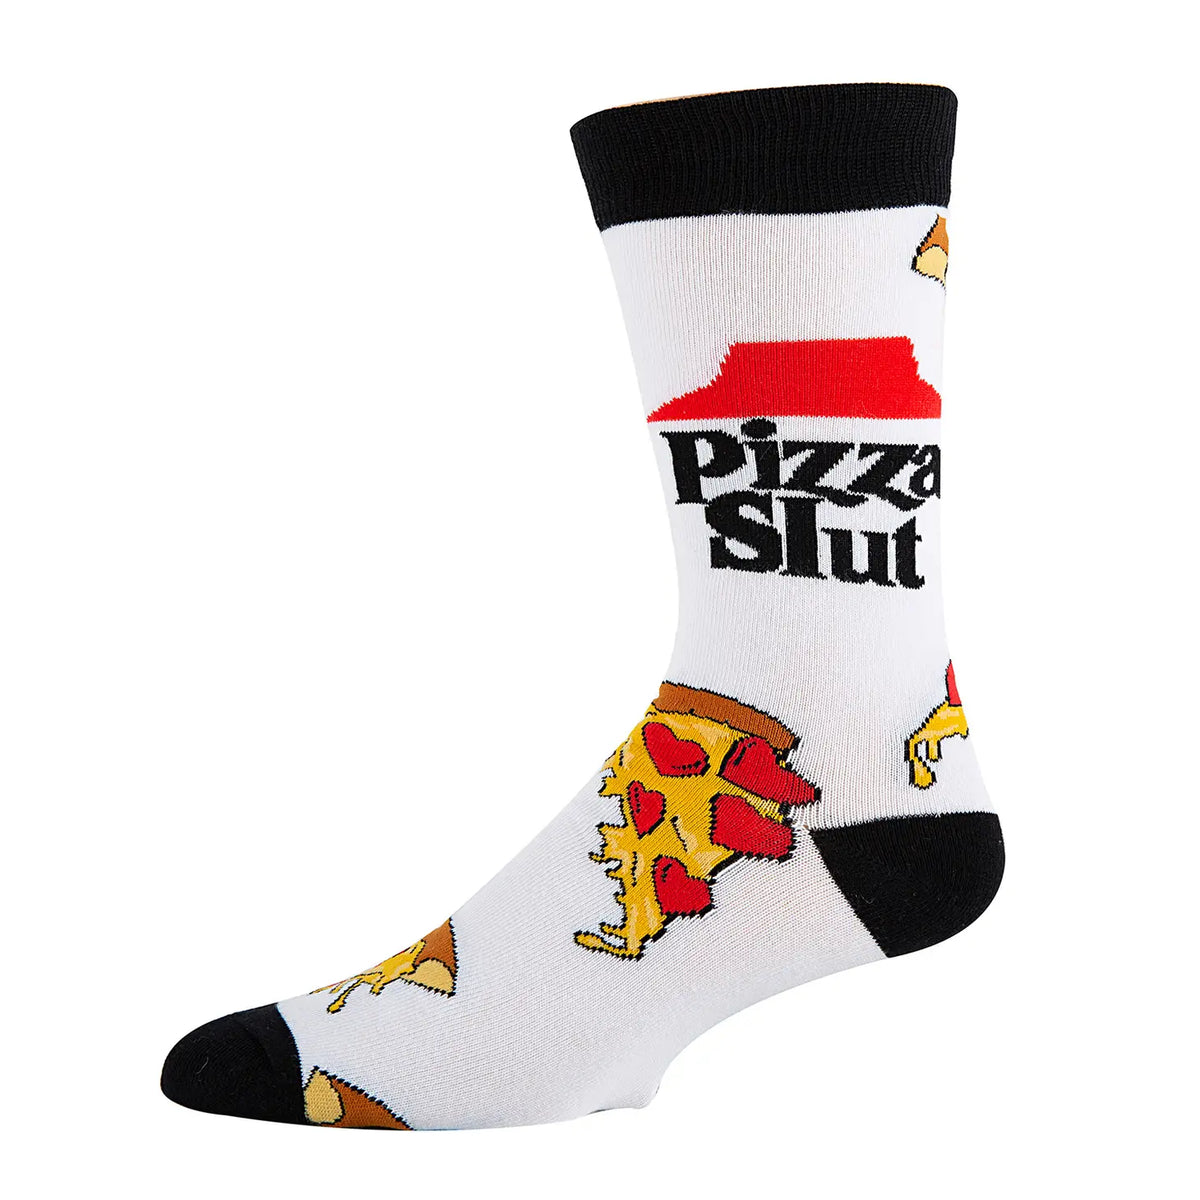 JY Designgs & Creation - Socks Pizza Slut